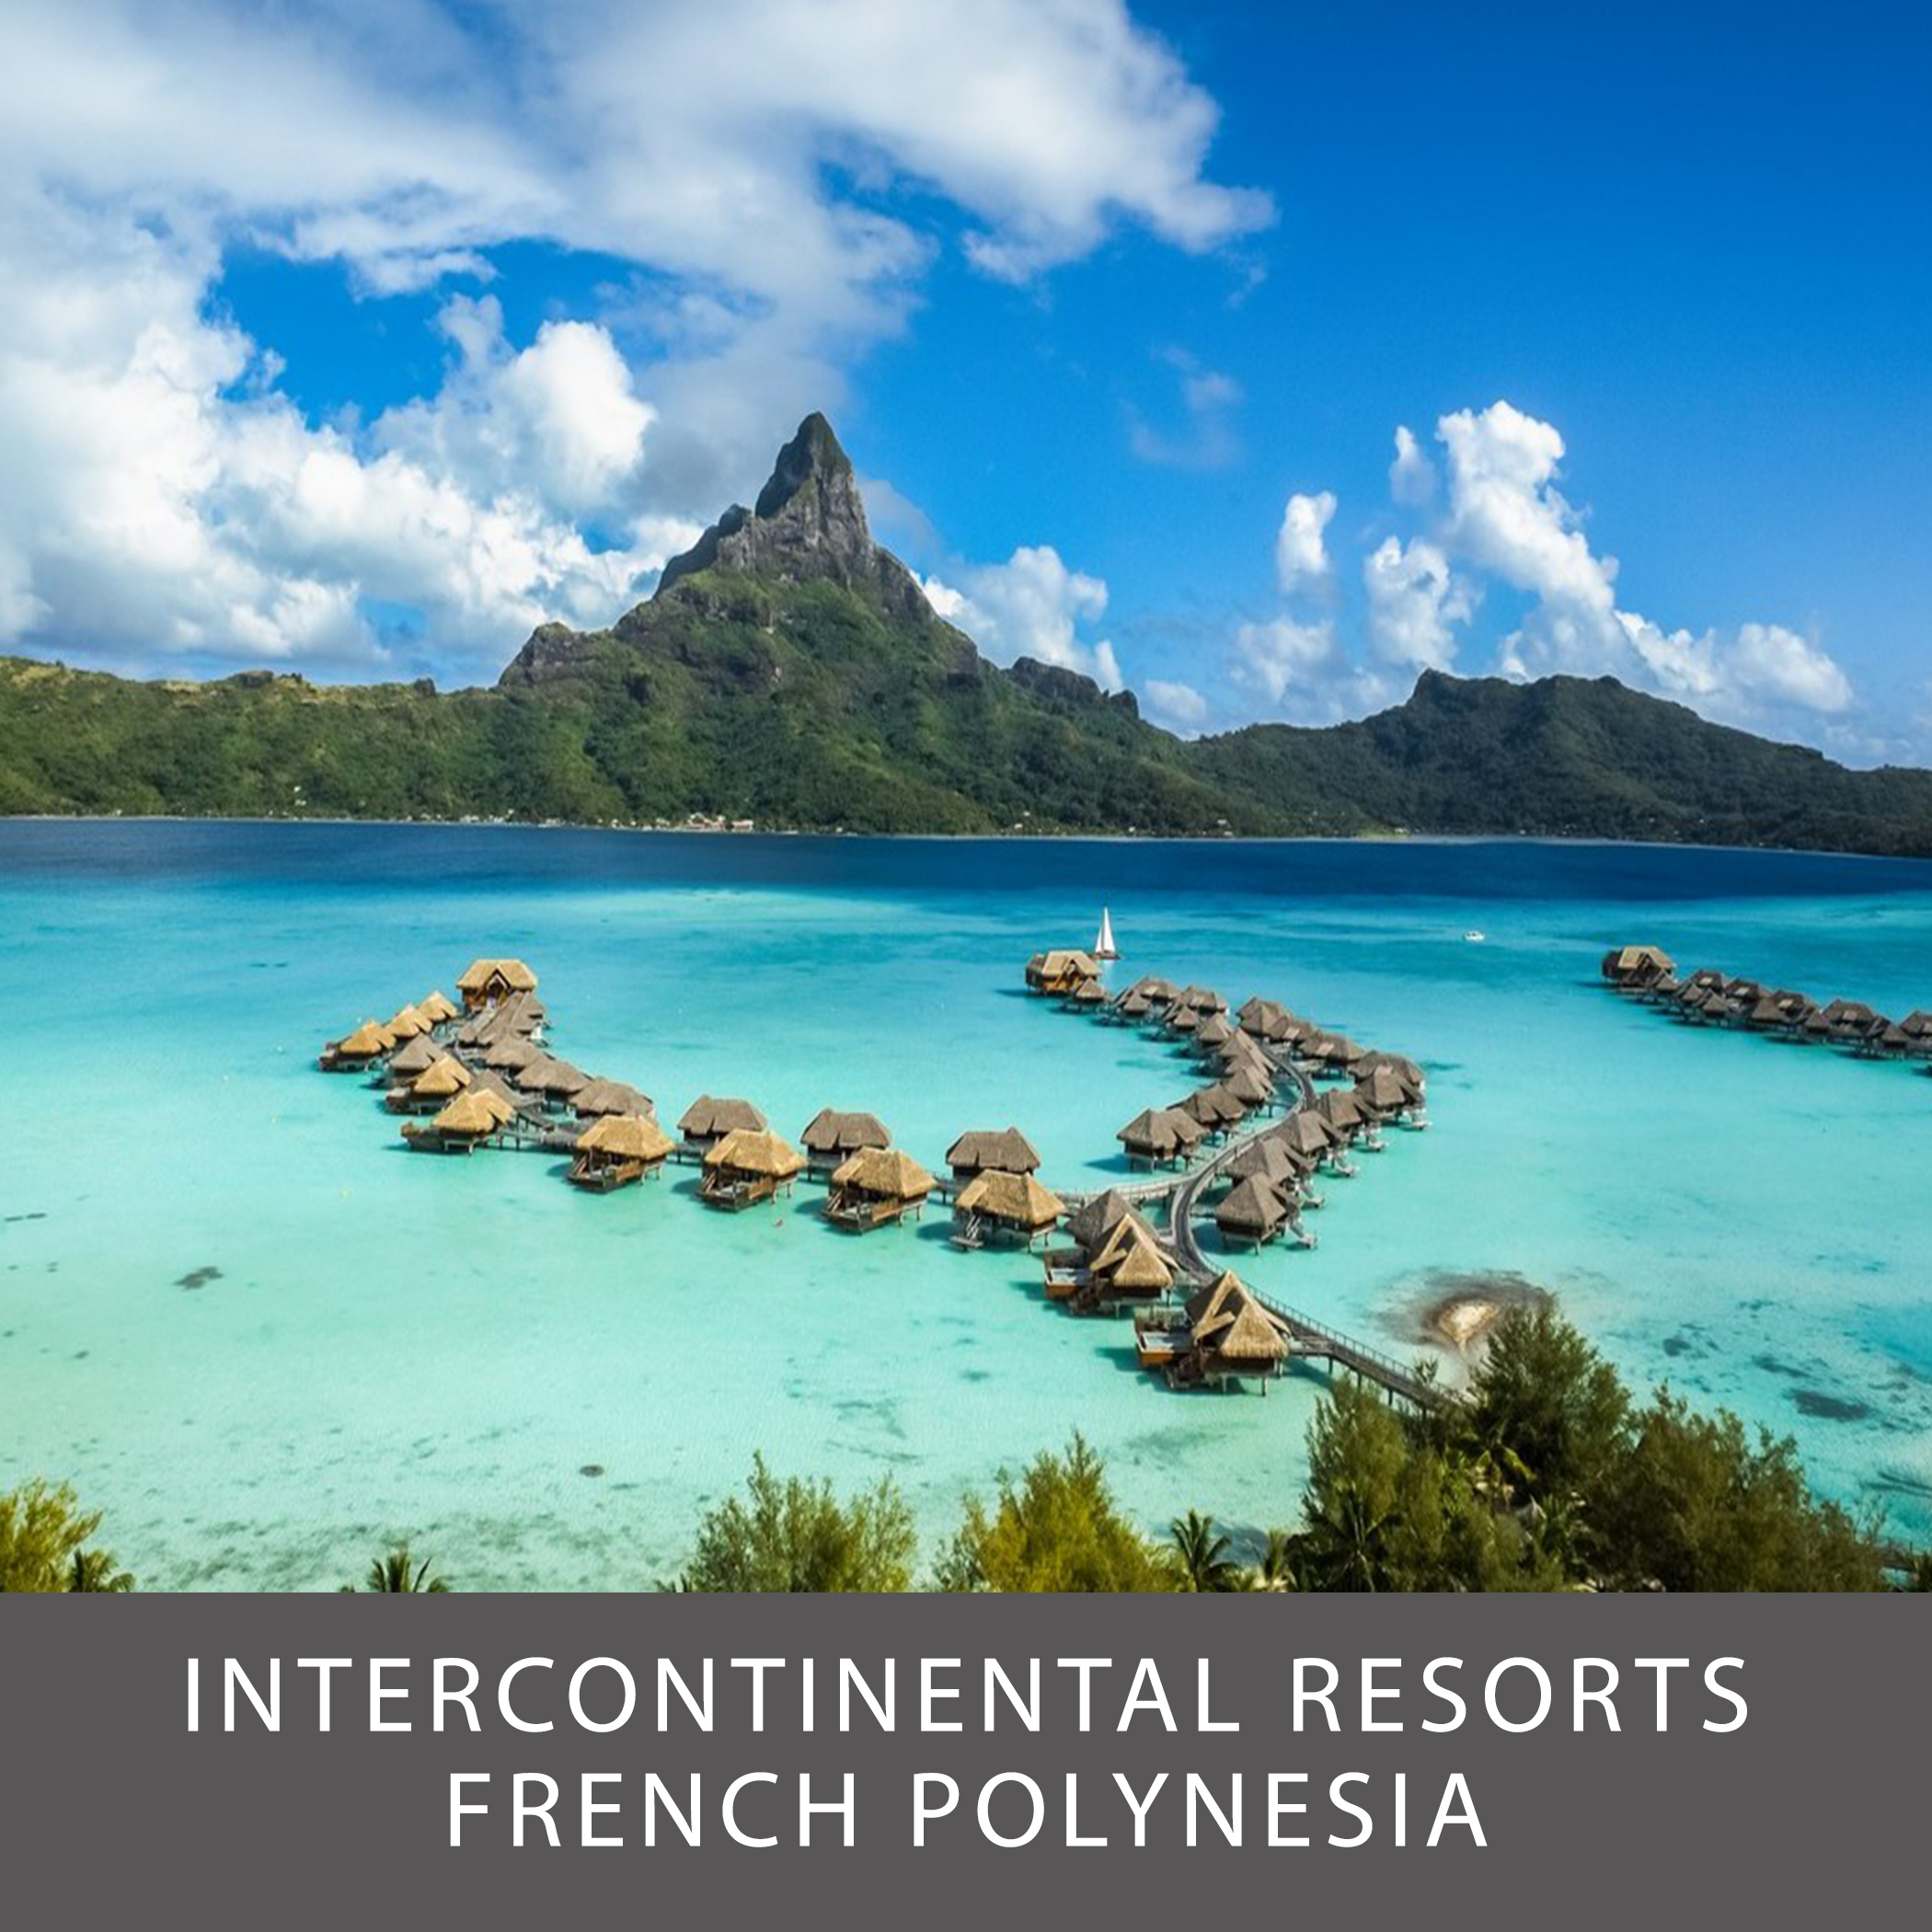 InterContinental French Polynesia